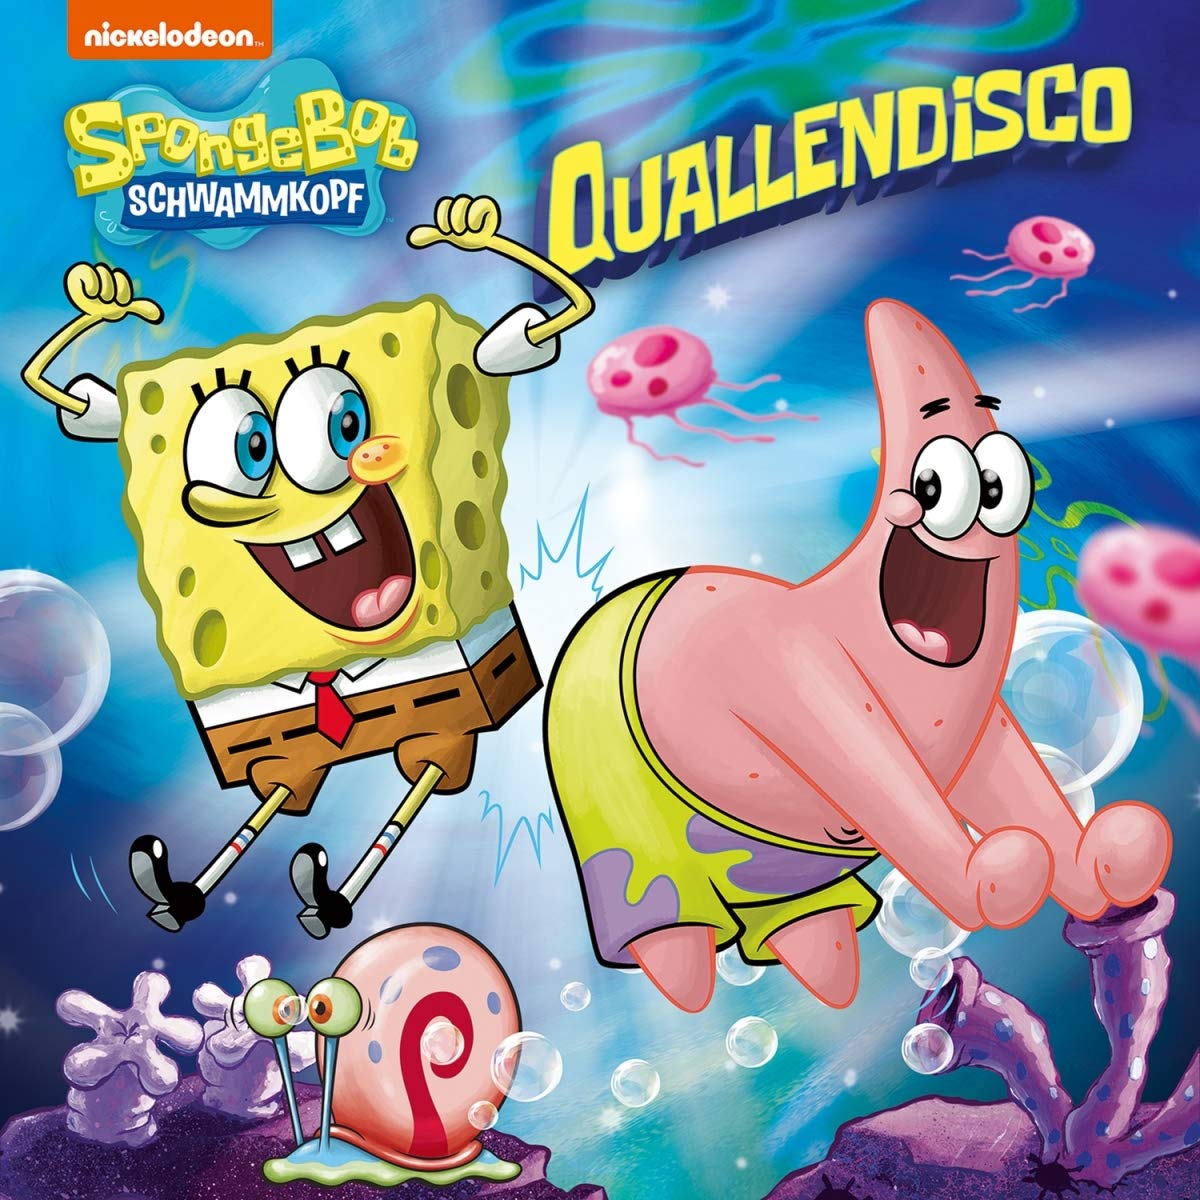 Spongebob Quallendisco